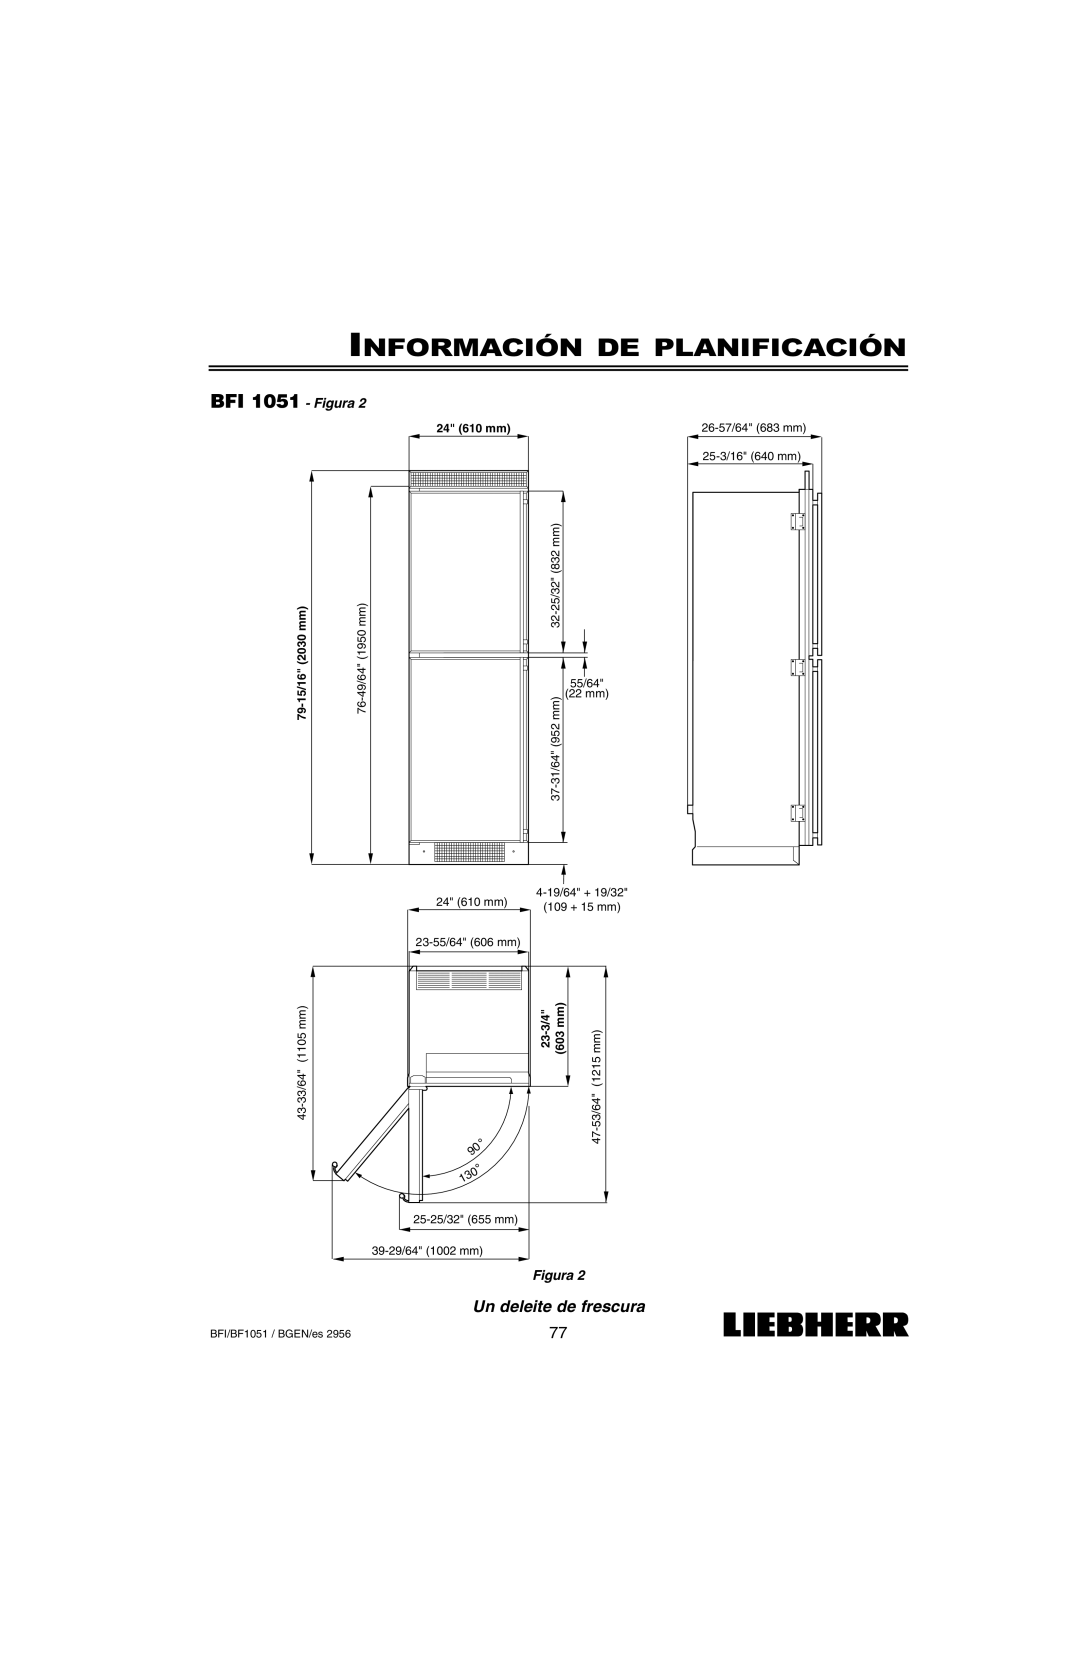 Liebherr BF1051 Información De Planificación, Un deleite de frescura, BFI 1051 - Figura, 37-31/64952, 24 610 mm, 23-3/4 